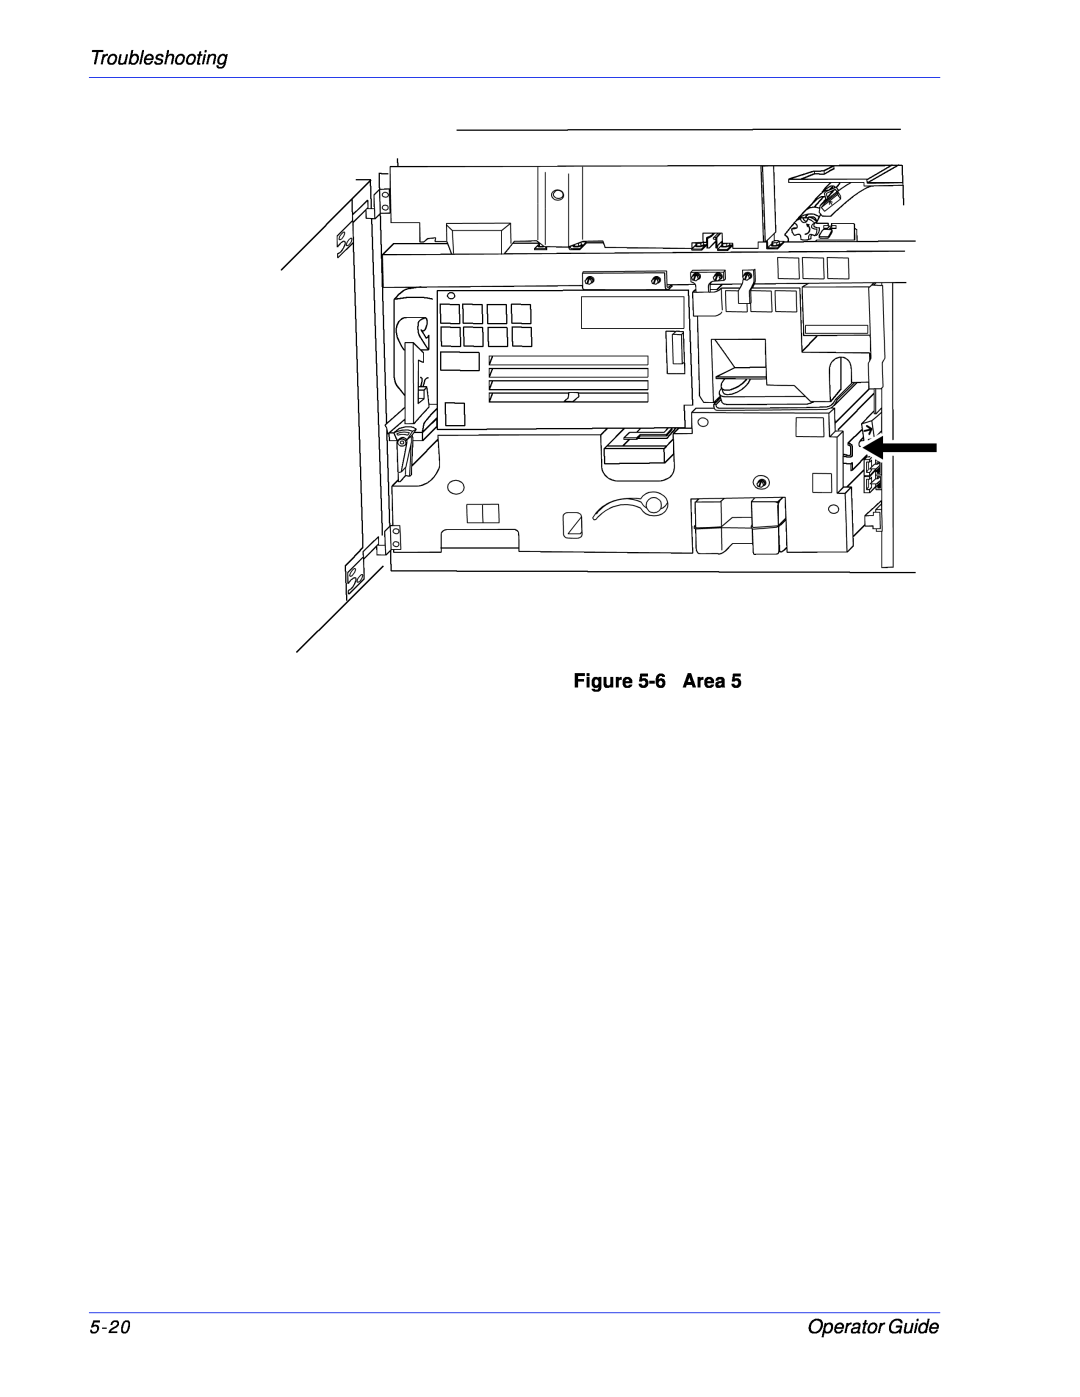 Xerox 100, 180 EPS manual Troubleshooting, 6Area, Operator Guide, 5-20 